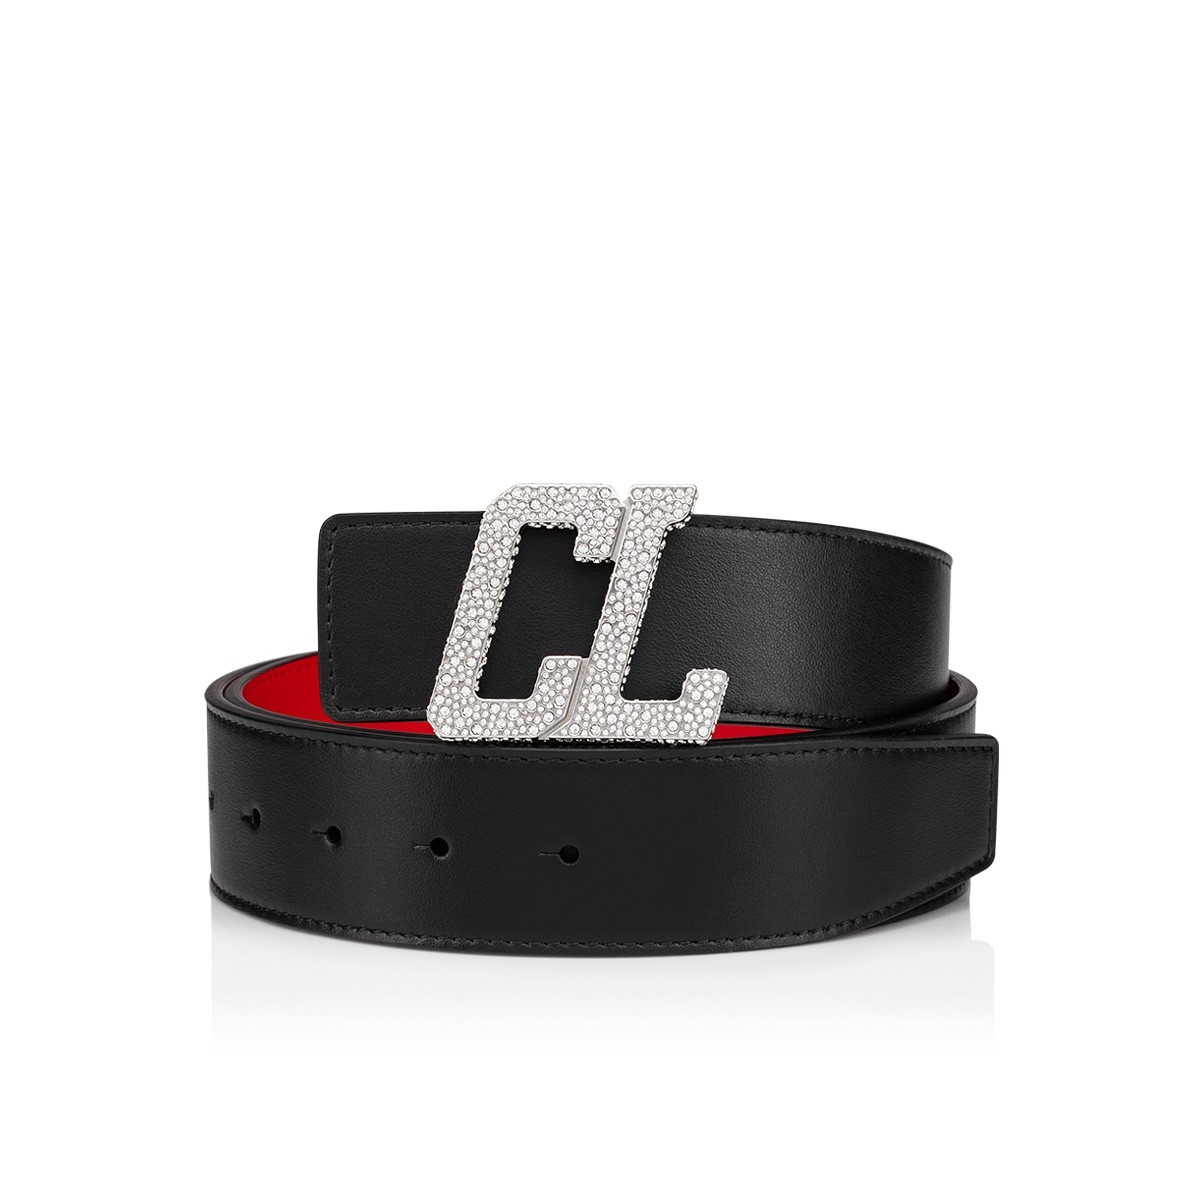 Happy Rui CL Logo belt buckle - 5